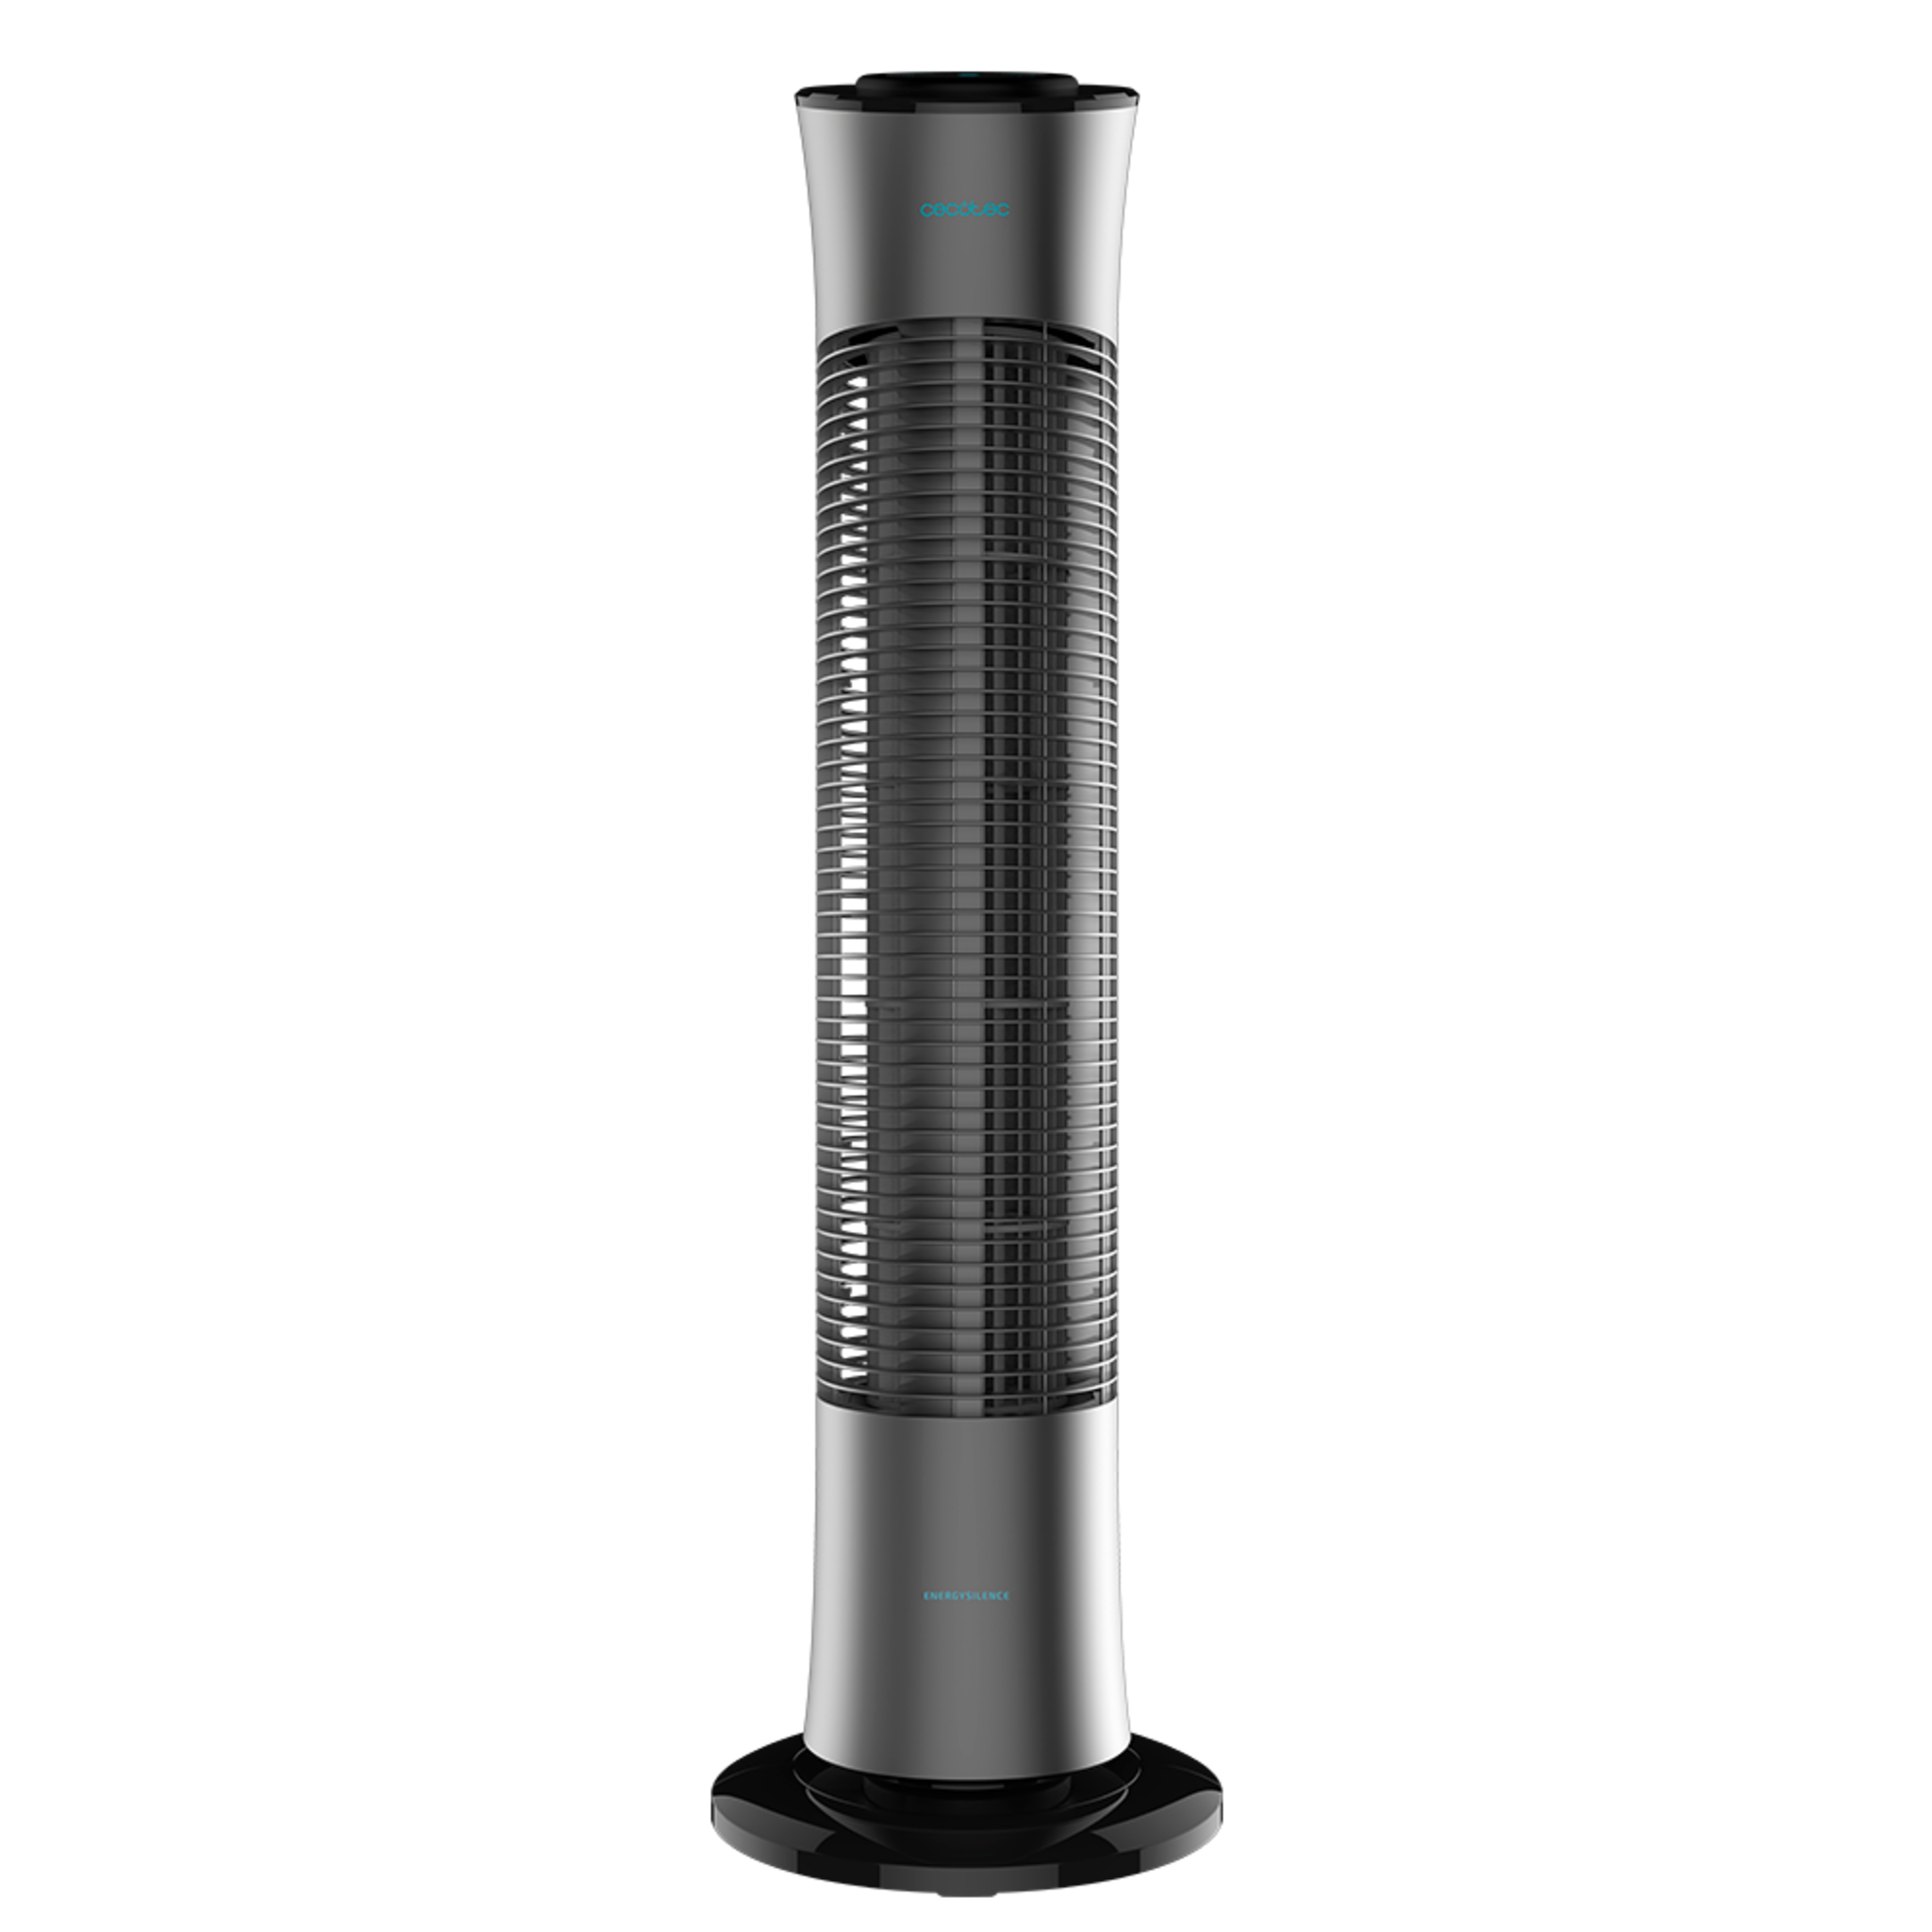 Ventilador de Torre con Mando a Distancia y Temporizador EnergySilence 7090 Skyline. 45 W, 30'' (76cm) de Altura, Oscilante, Motor de Cobre, 3 Velocidades, Gris